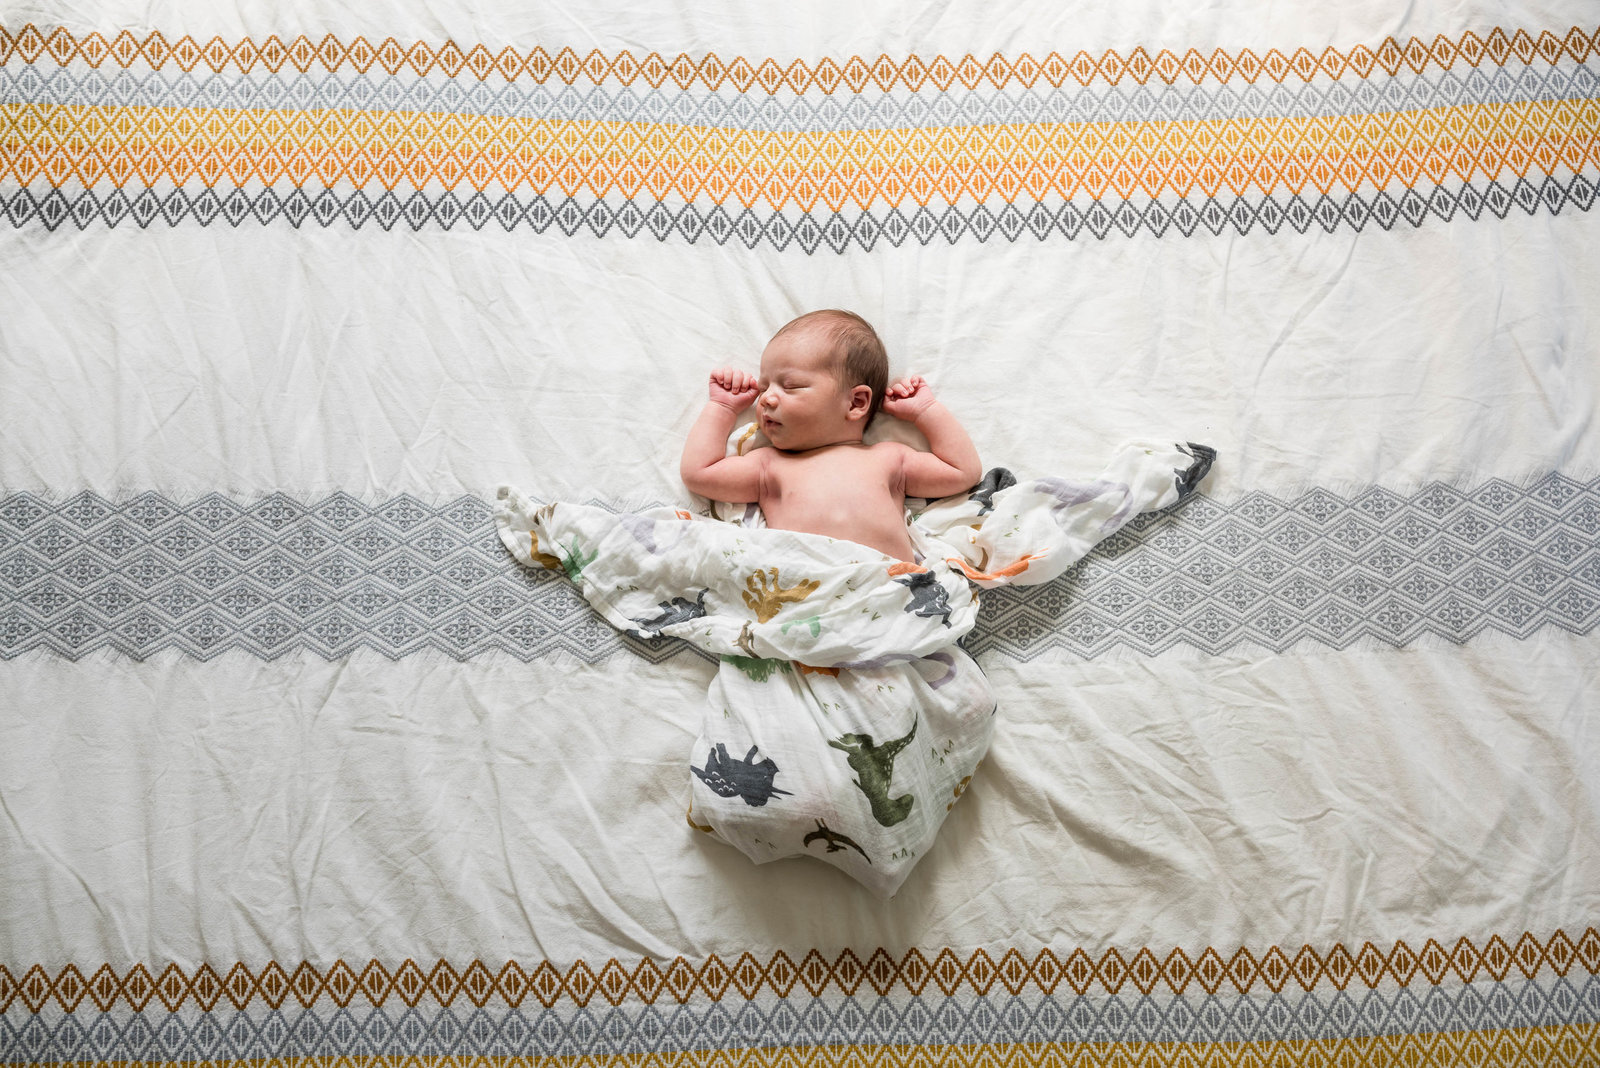 Boston-Newborn-Photographer-Lifestyle-Documentary-Home-Styled-Session-385